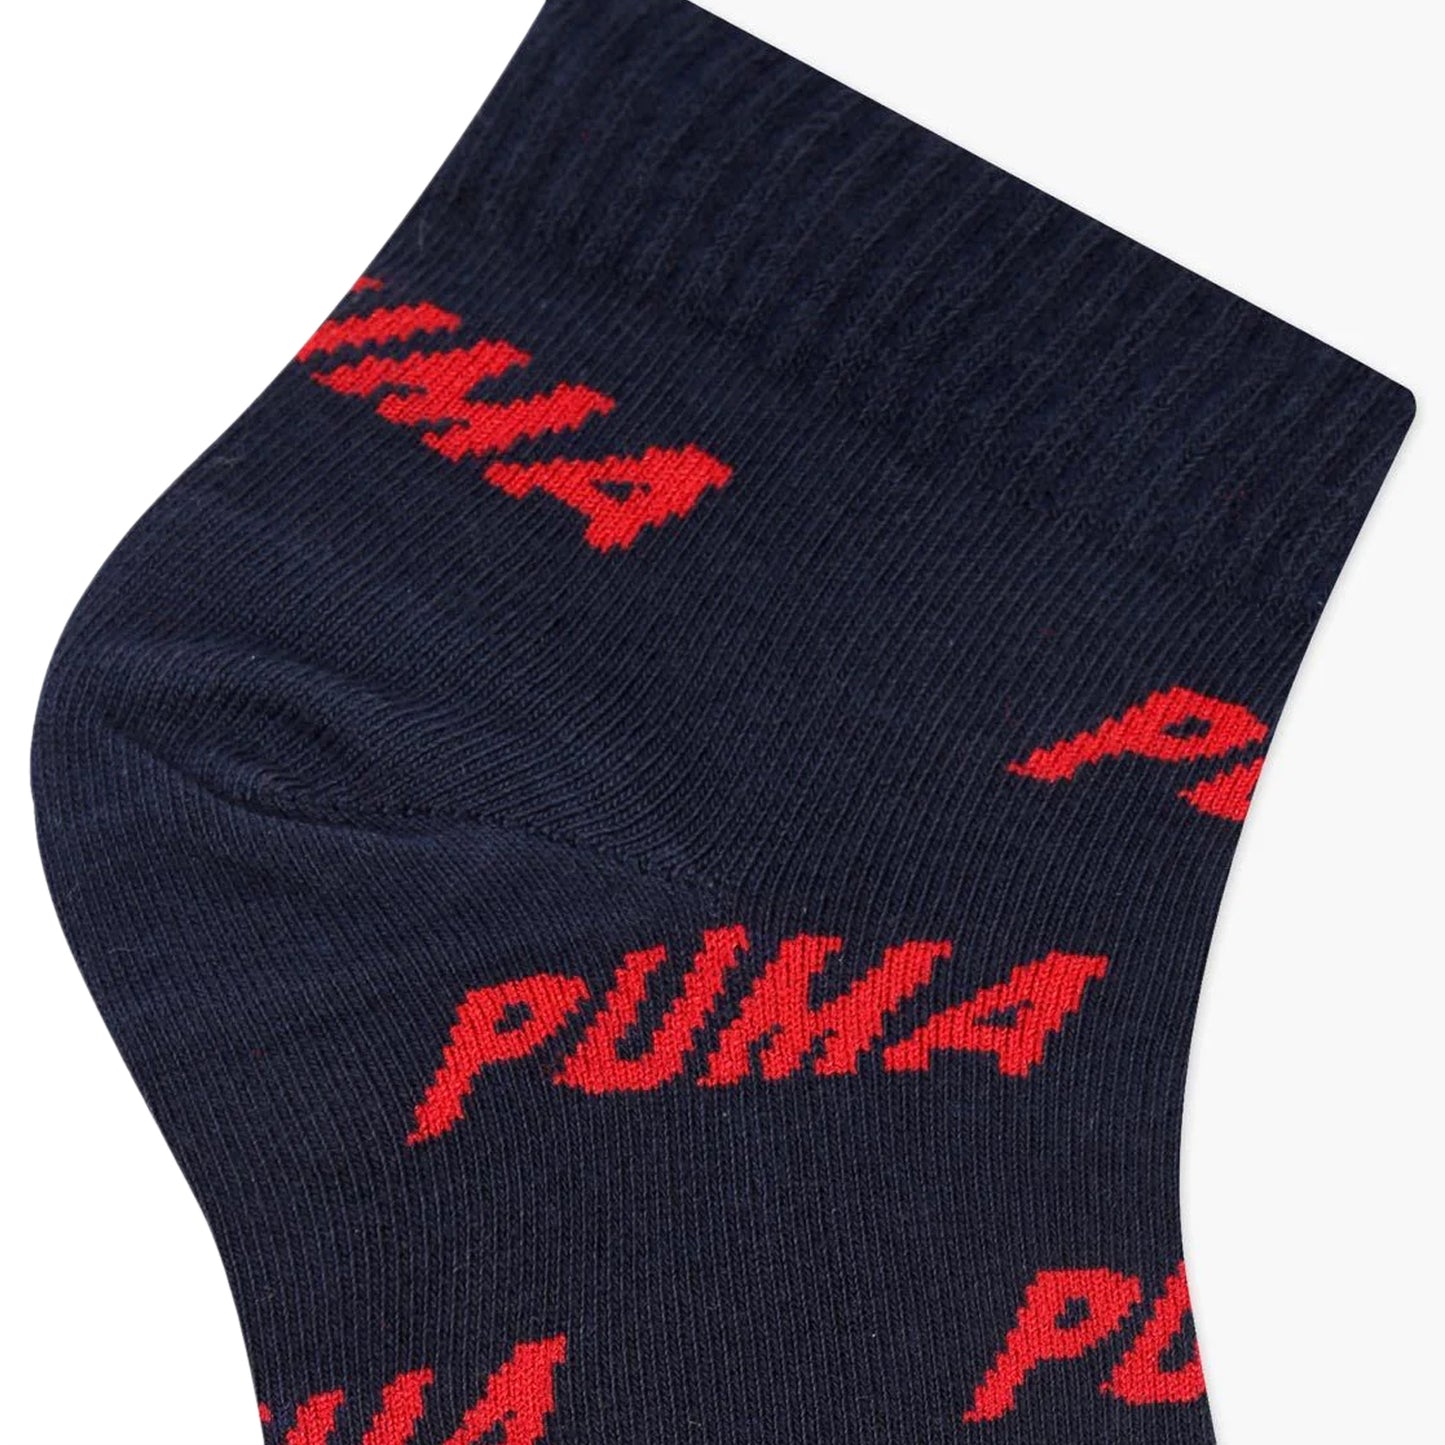 Puma Quarter All Over Logo Soft Cotton Socks, 2 Pairs, Navy/Red - Best Price online Prokicksports.com